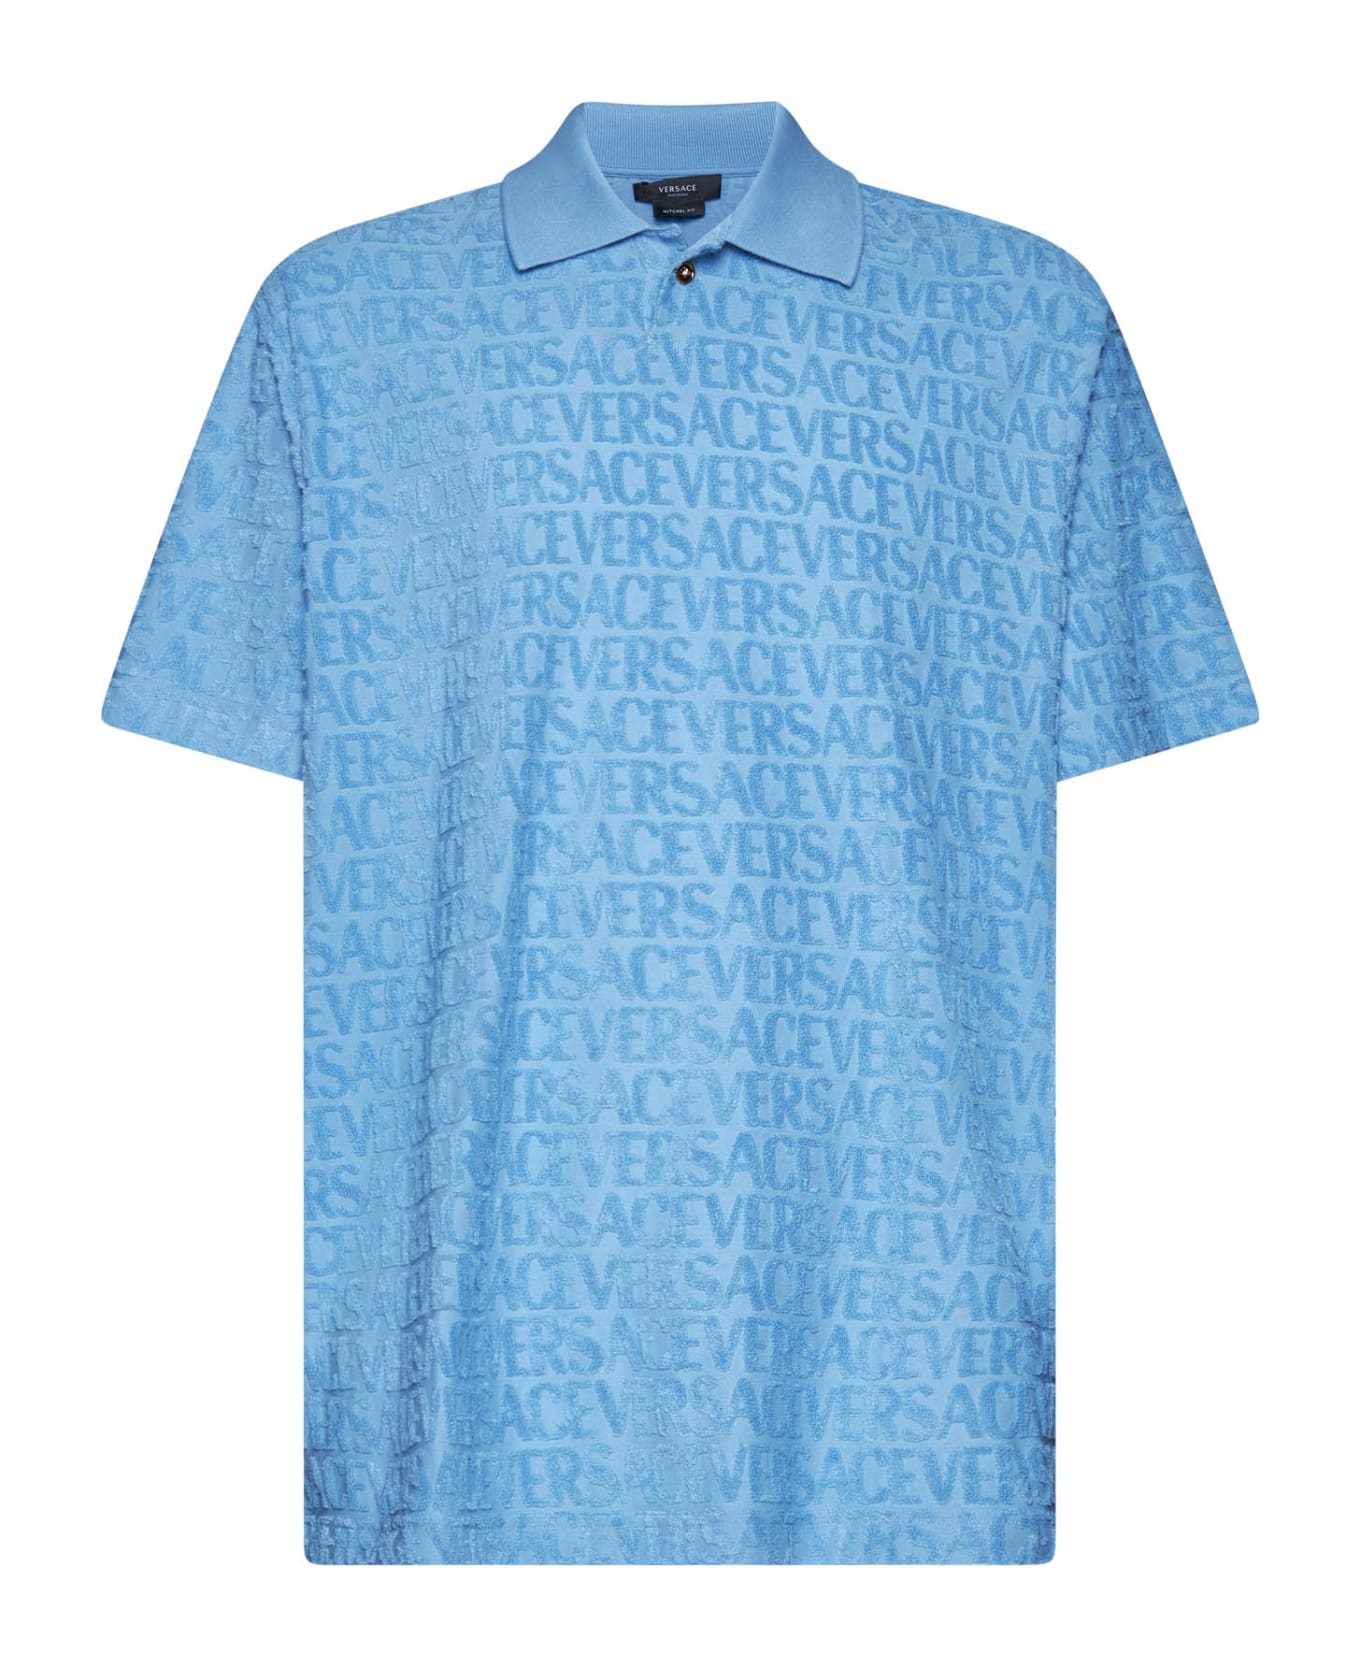 Versace Polo Shirt - Summer sky blue